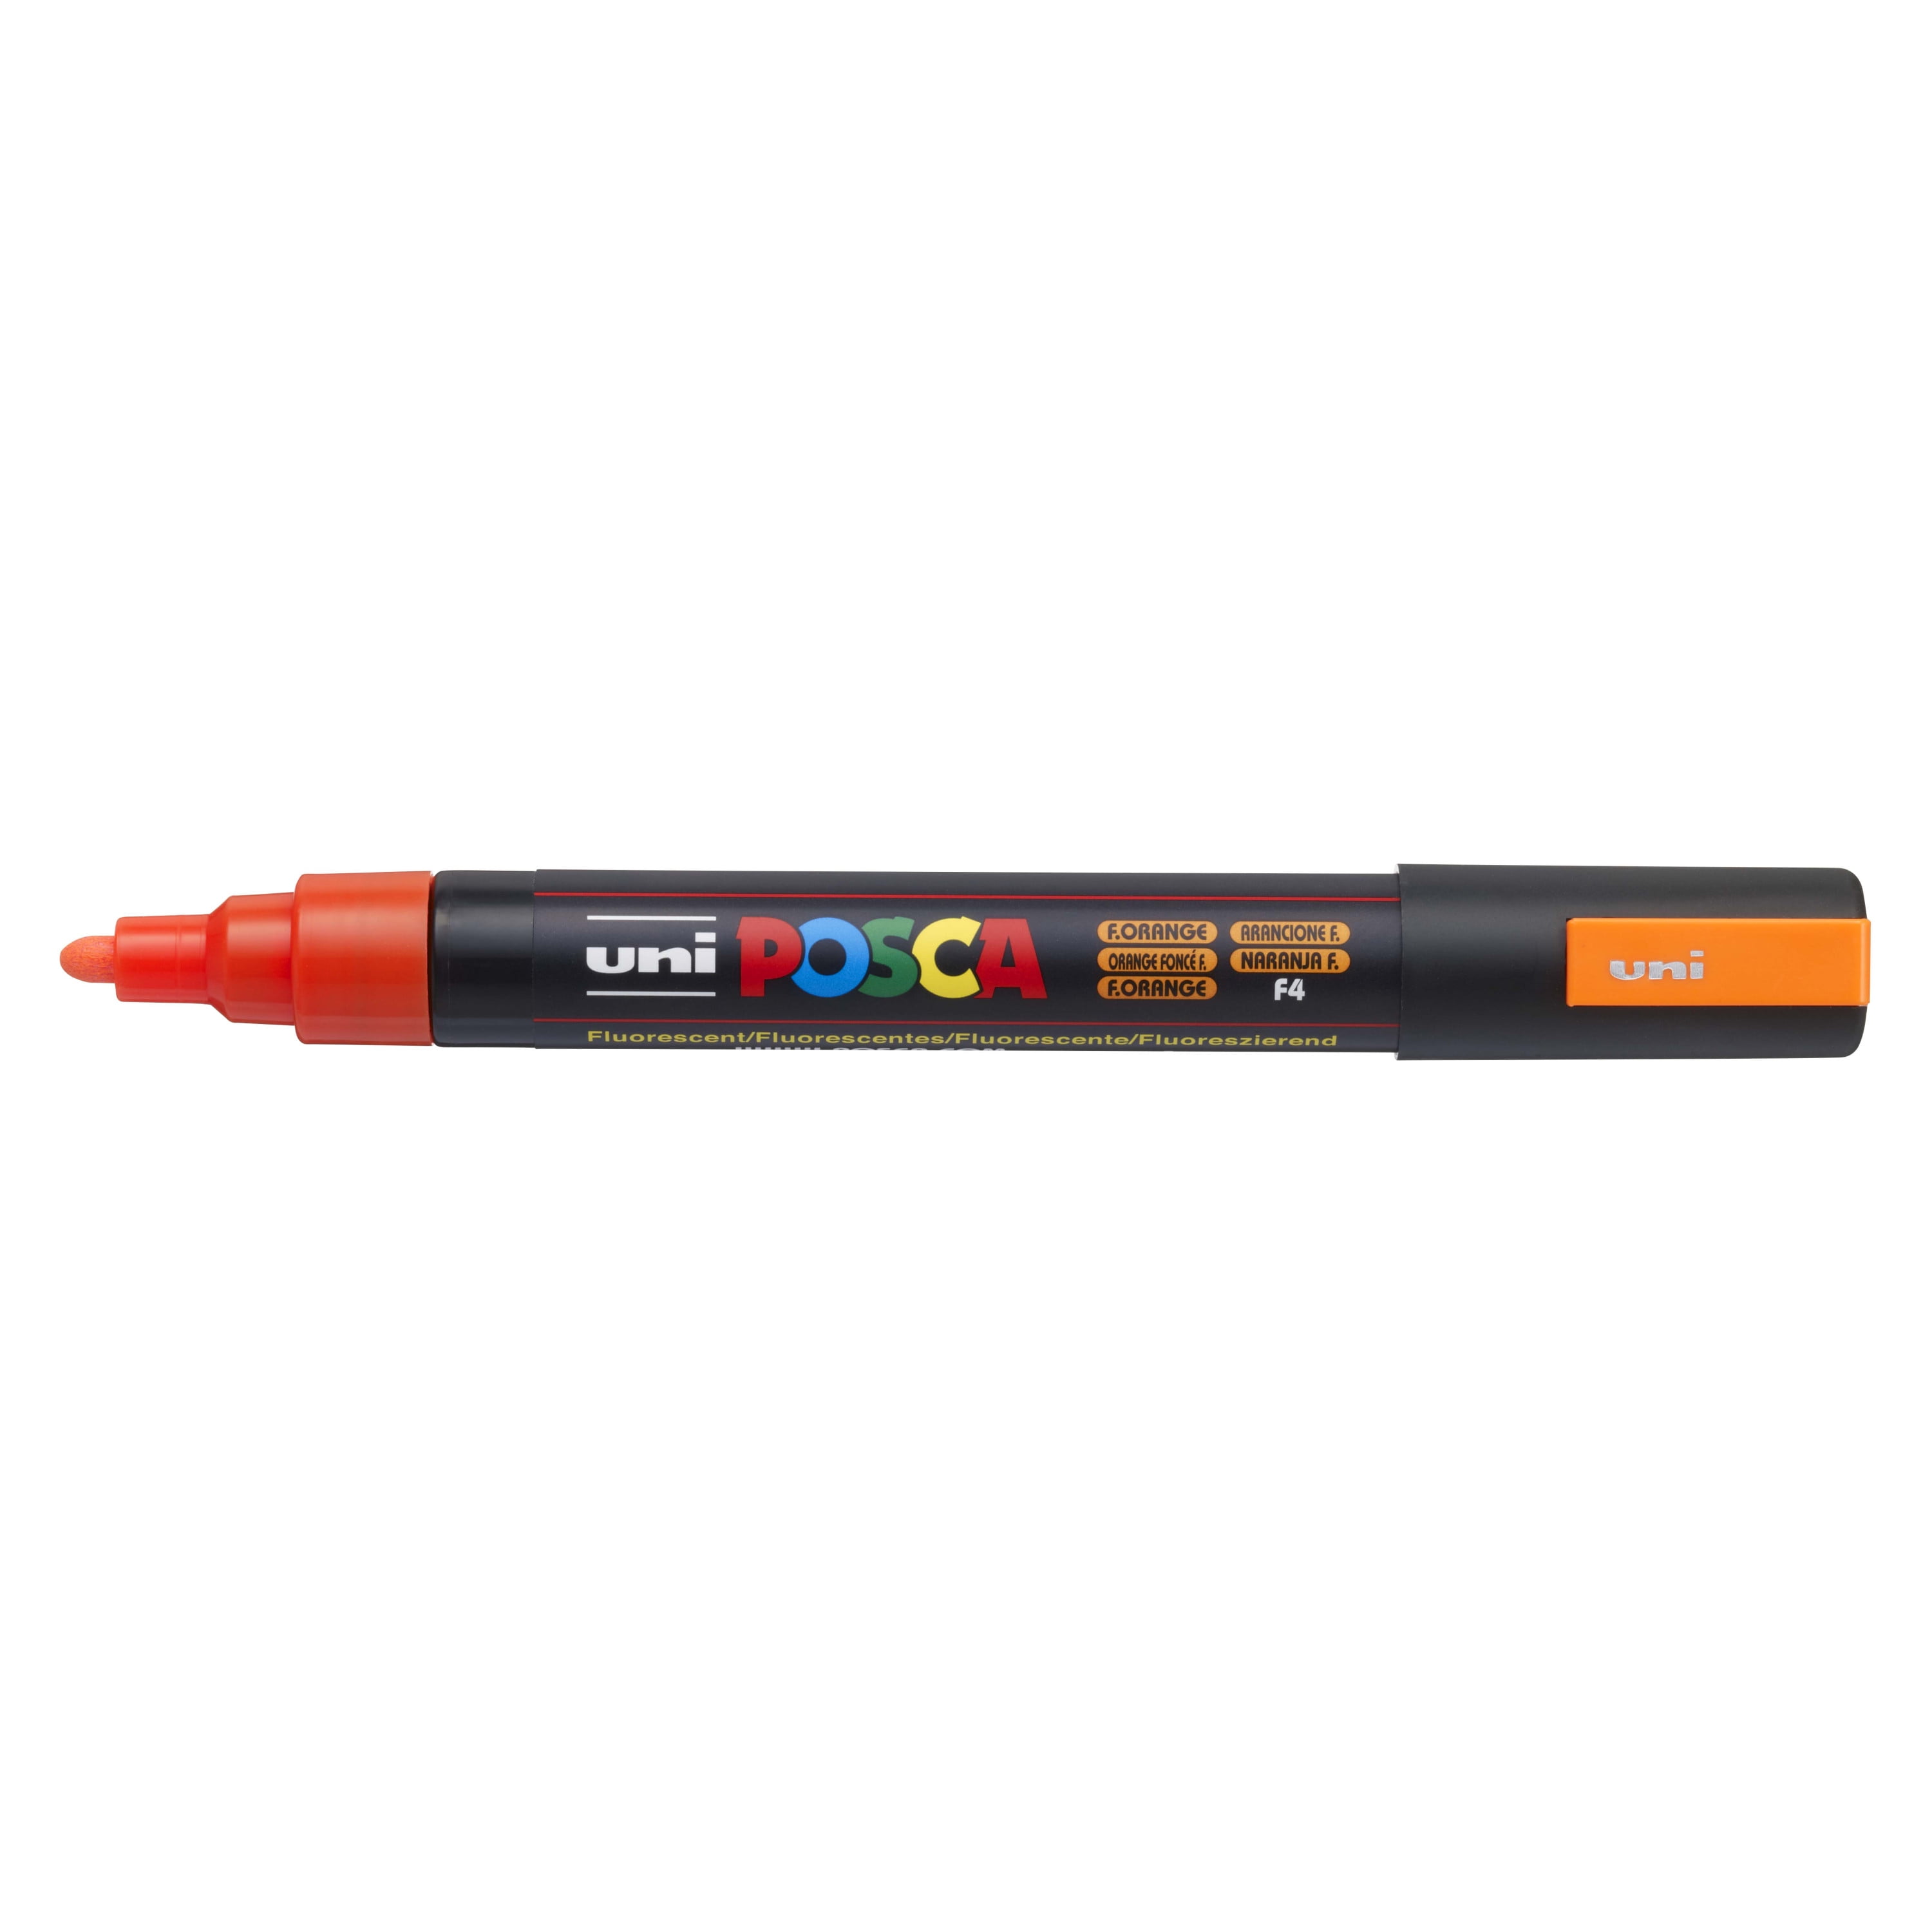 Uni-posca Paint Marker Pen 42 BUNDLE SET , Mitsubishi Pencil Uni Posca –  Art Supplies Japan